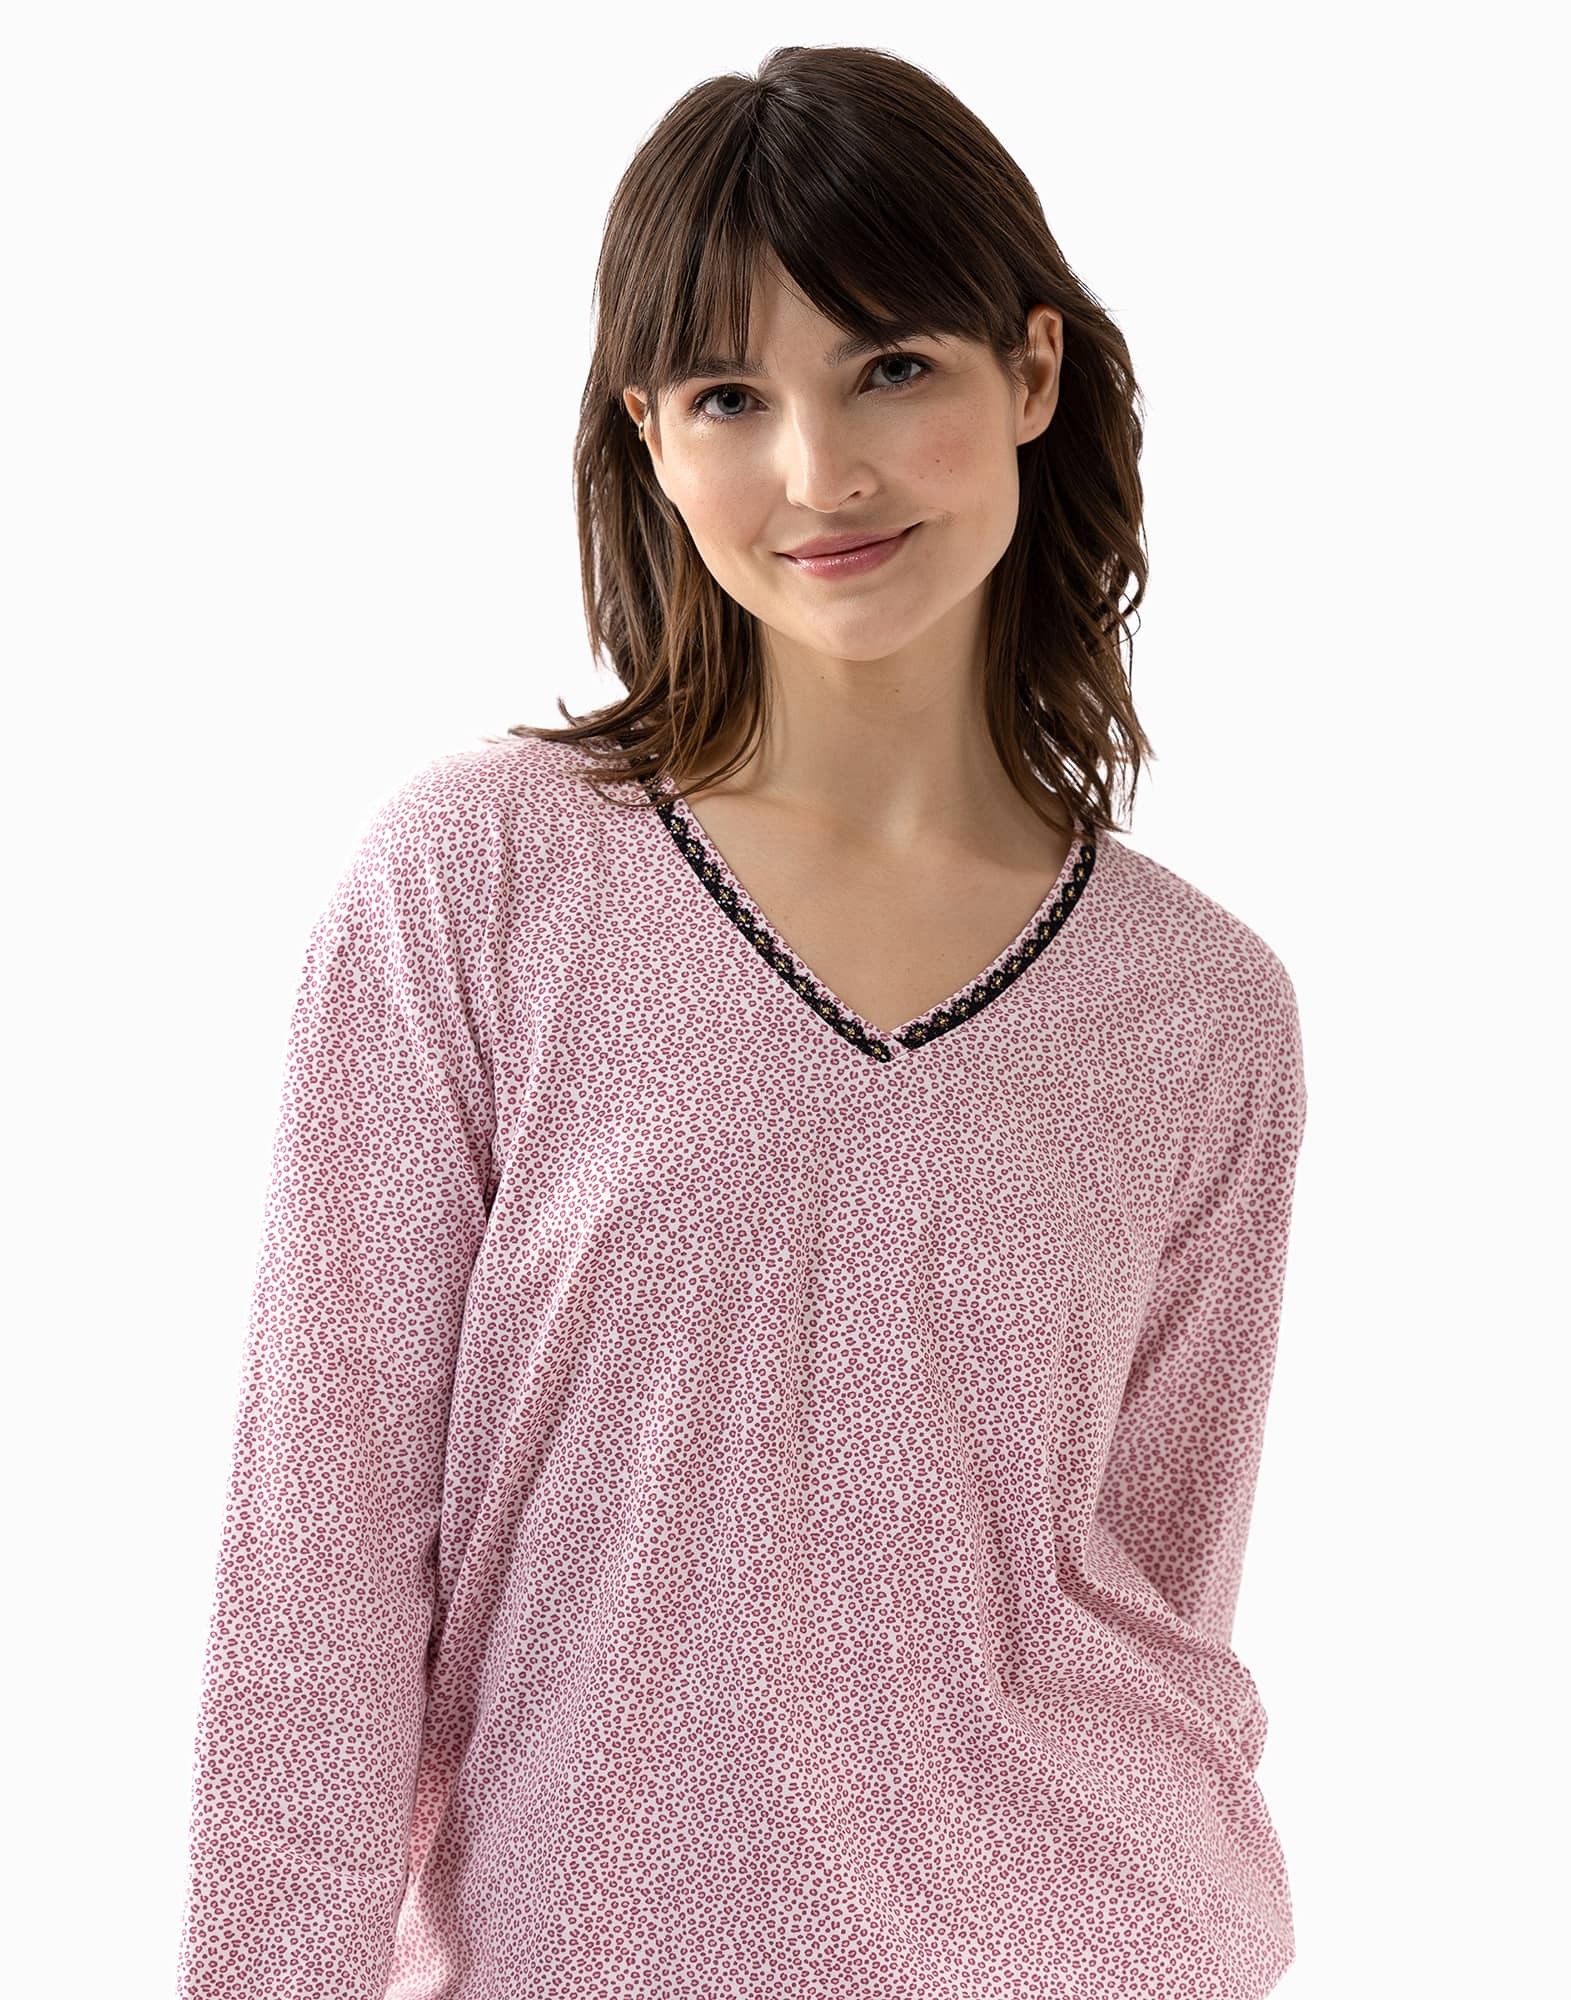 Jersey fabric pyjamas FOREVER 602 pink